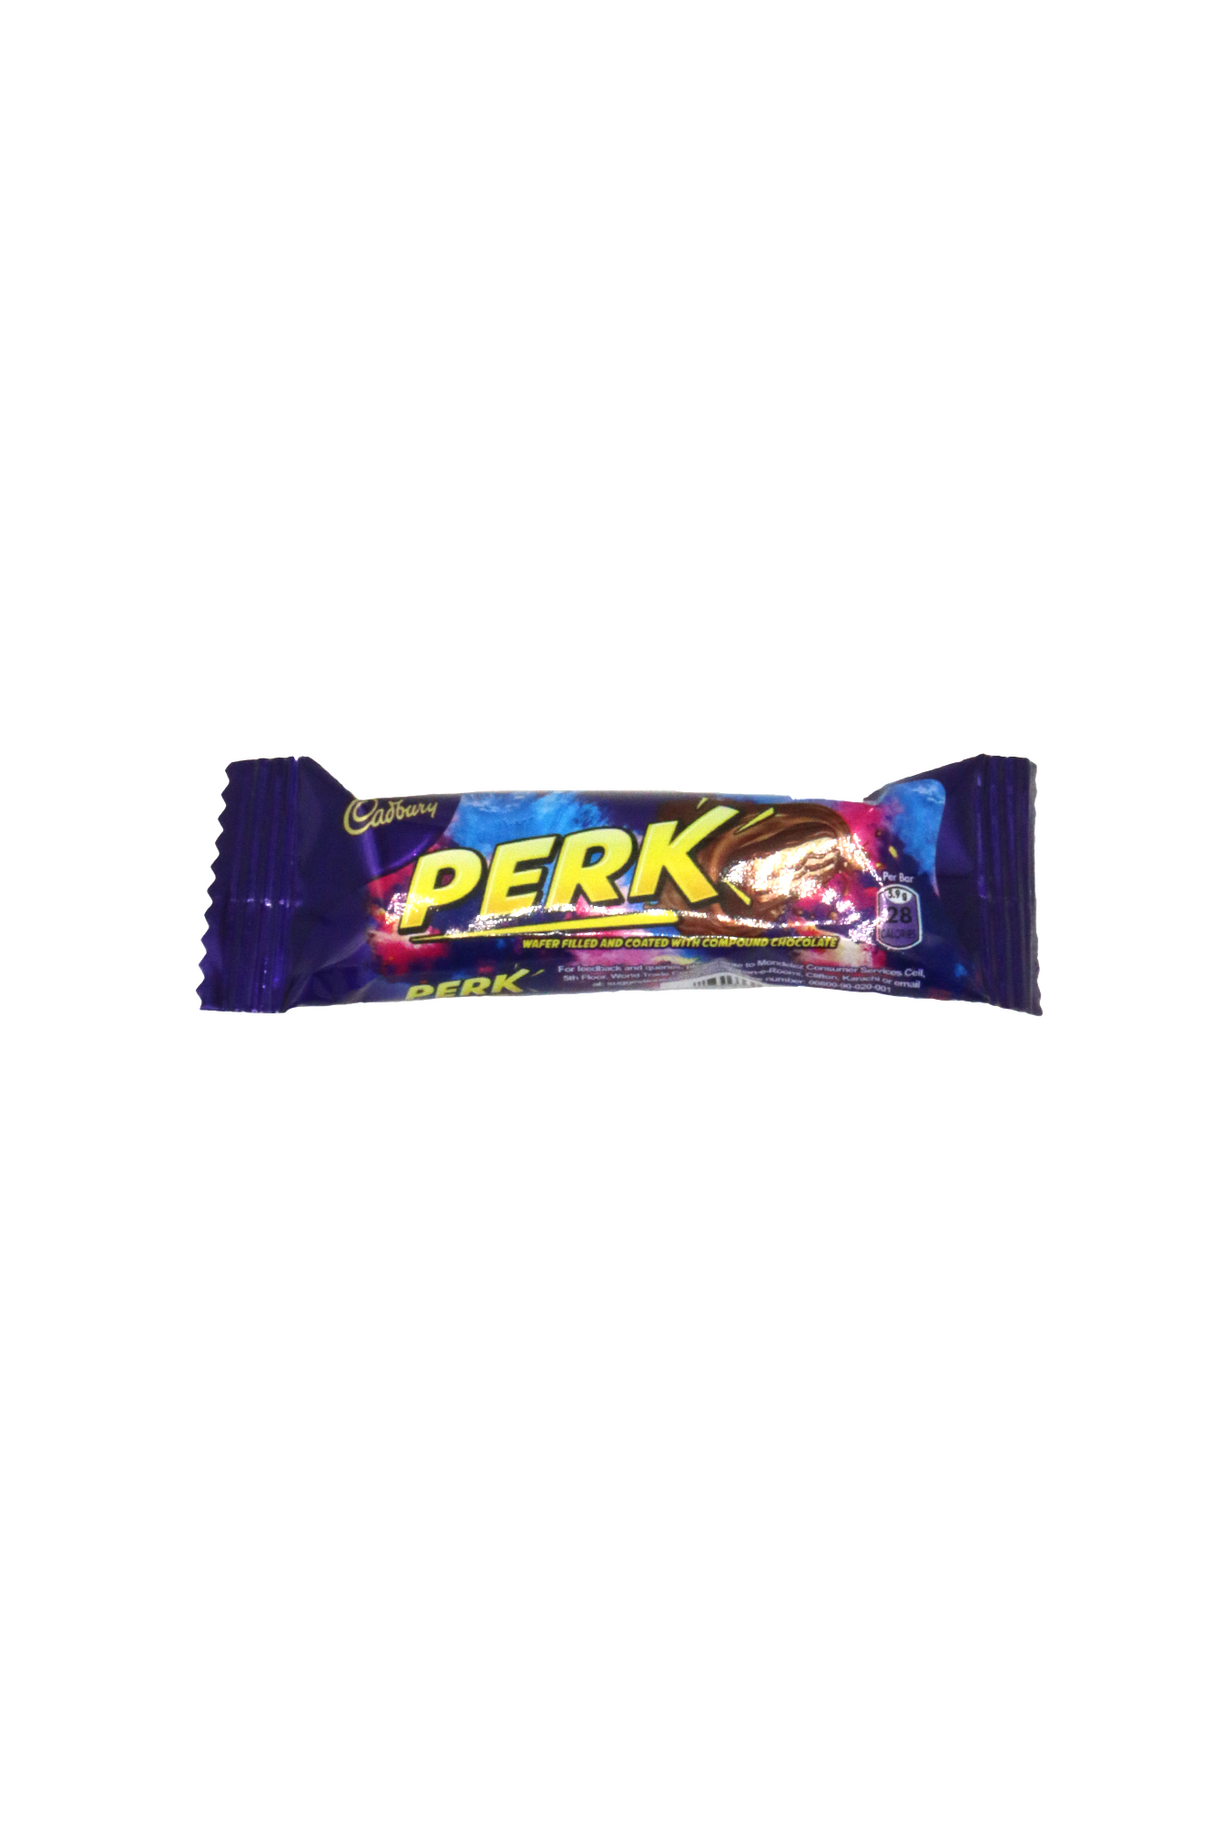 cadbury perk 5.9g